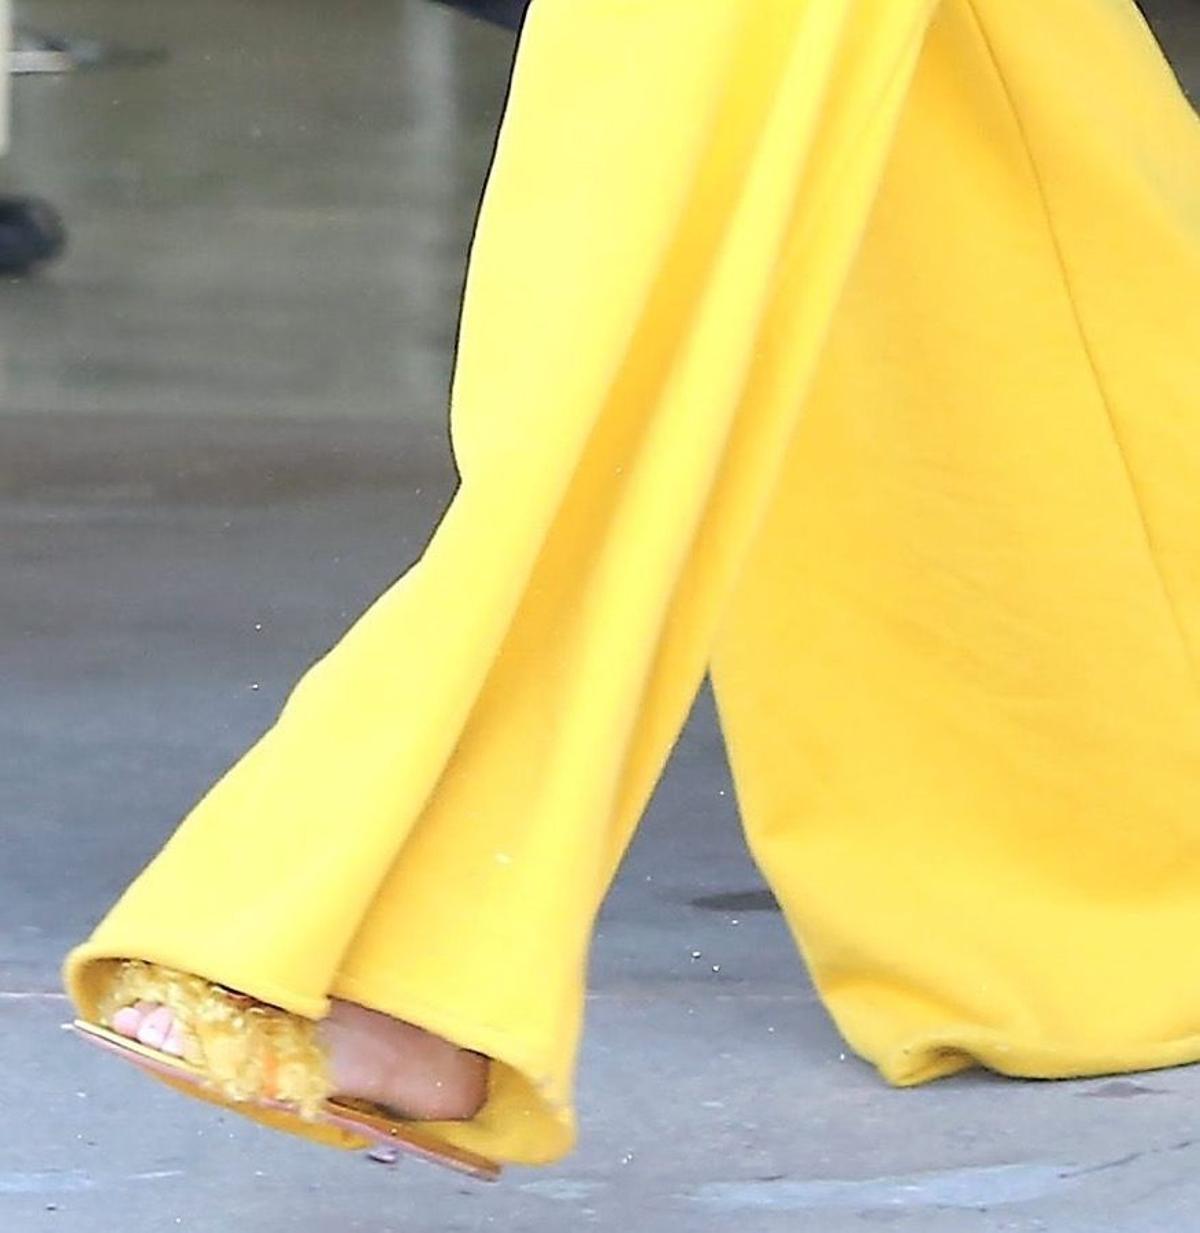 Detalle de la sandalia de Kendall Jenner